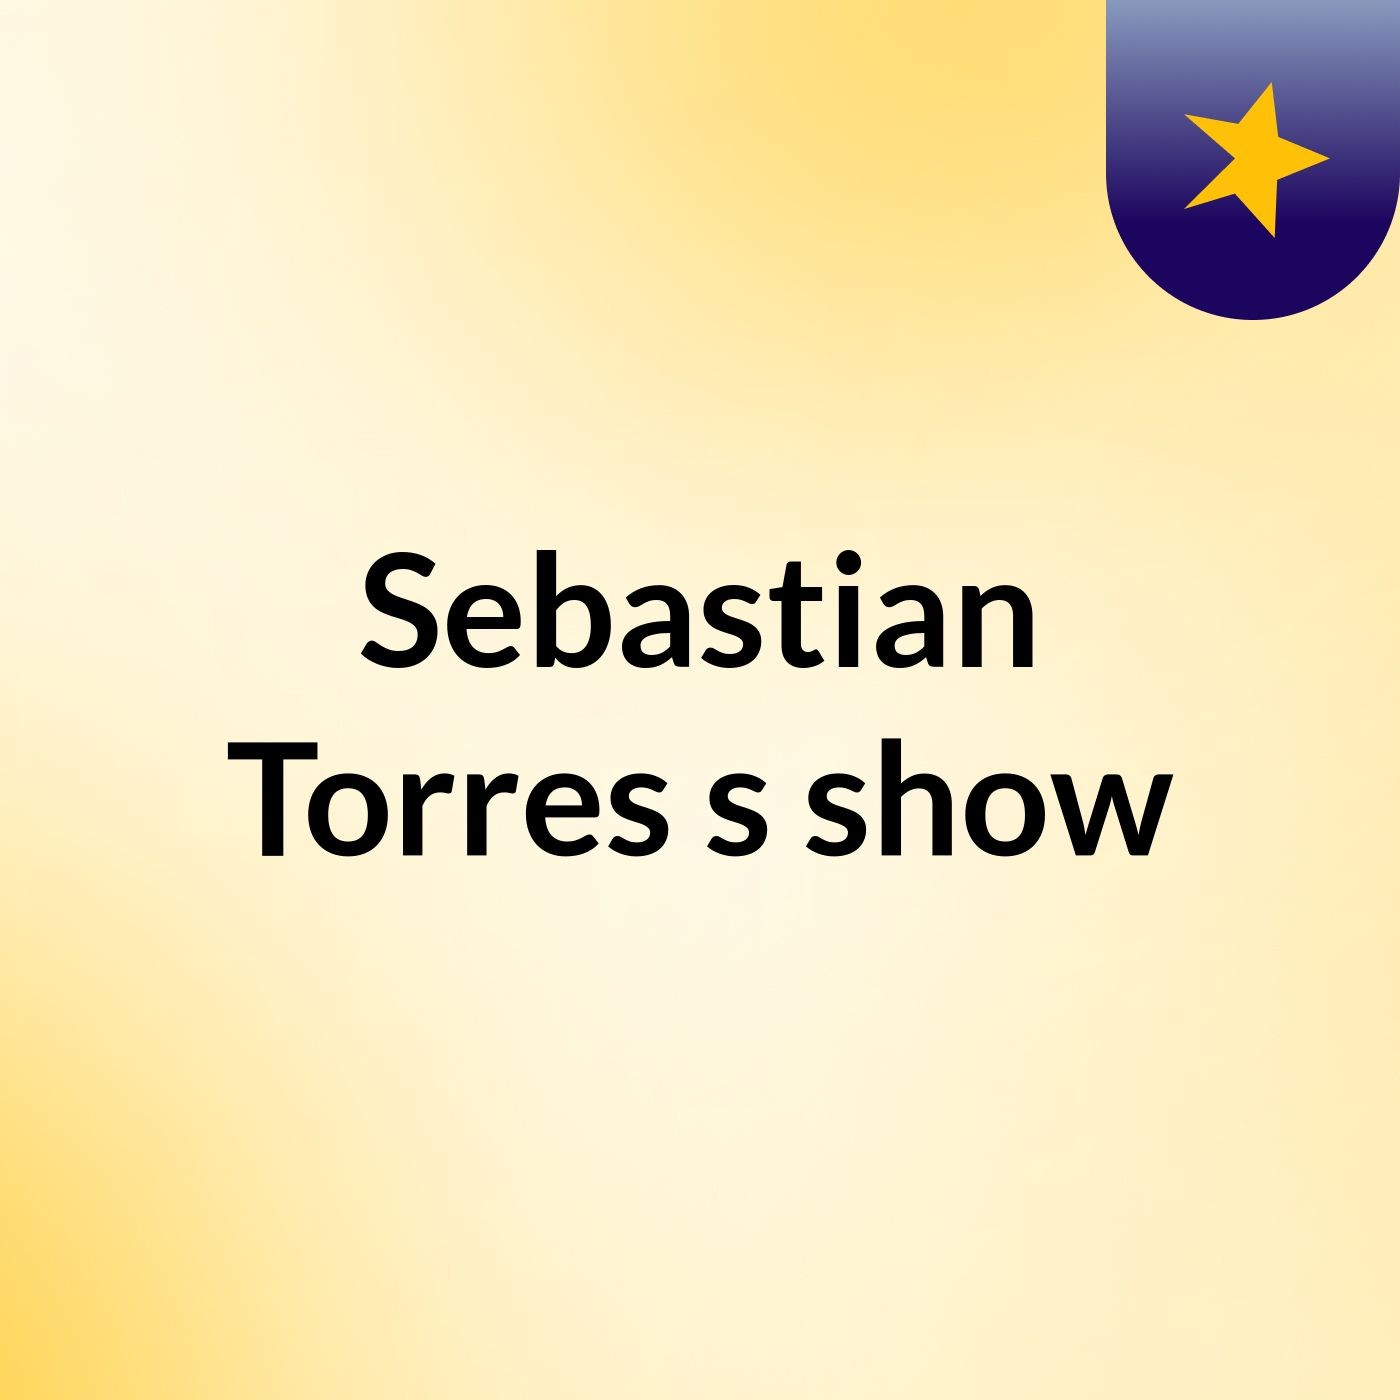 Sebastian Torres's show